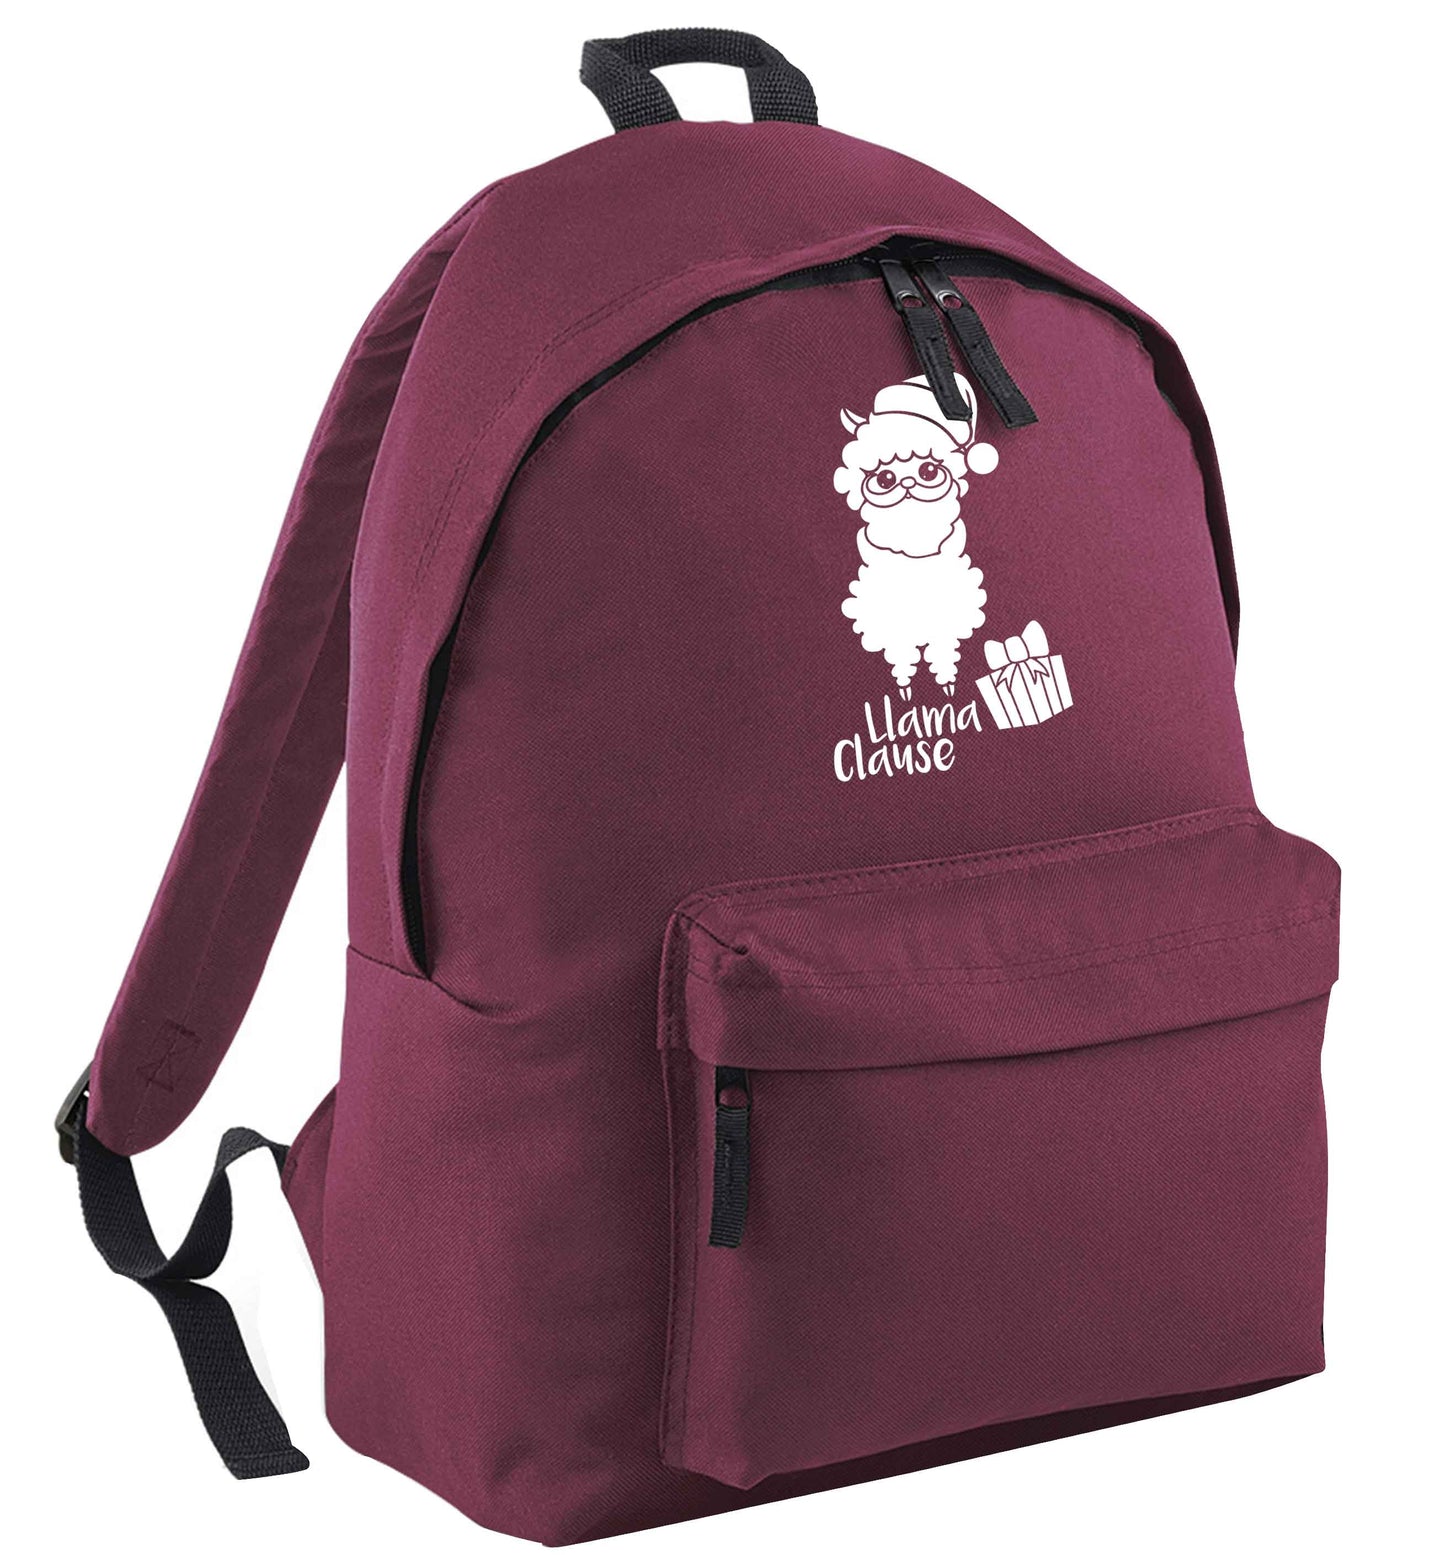 Llama Clause maroon adults backpack